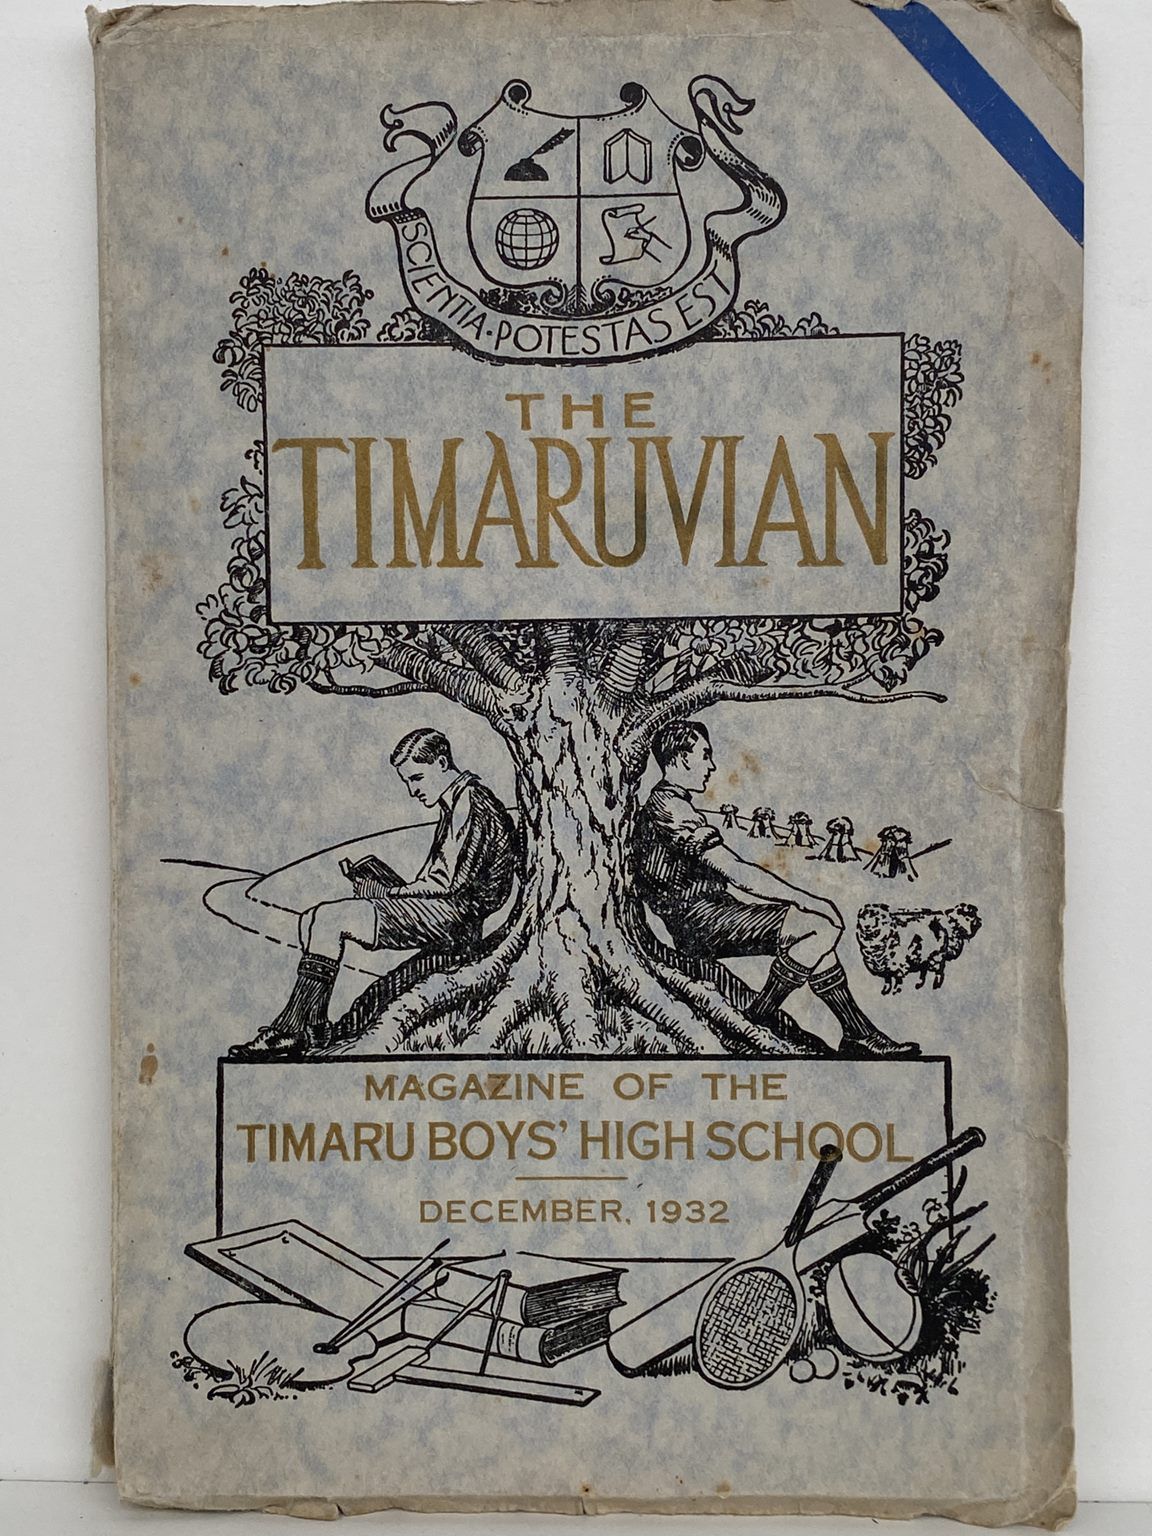 THE TIMARUVIAN: Magazine of the Timaru Boys' High School - December 1932